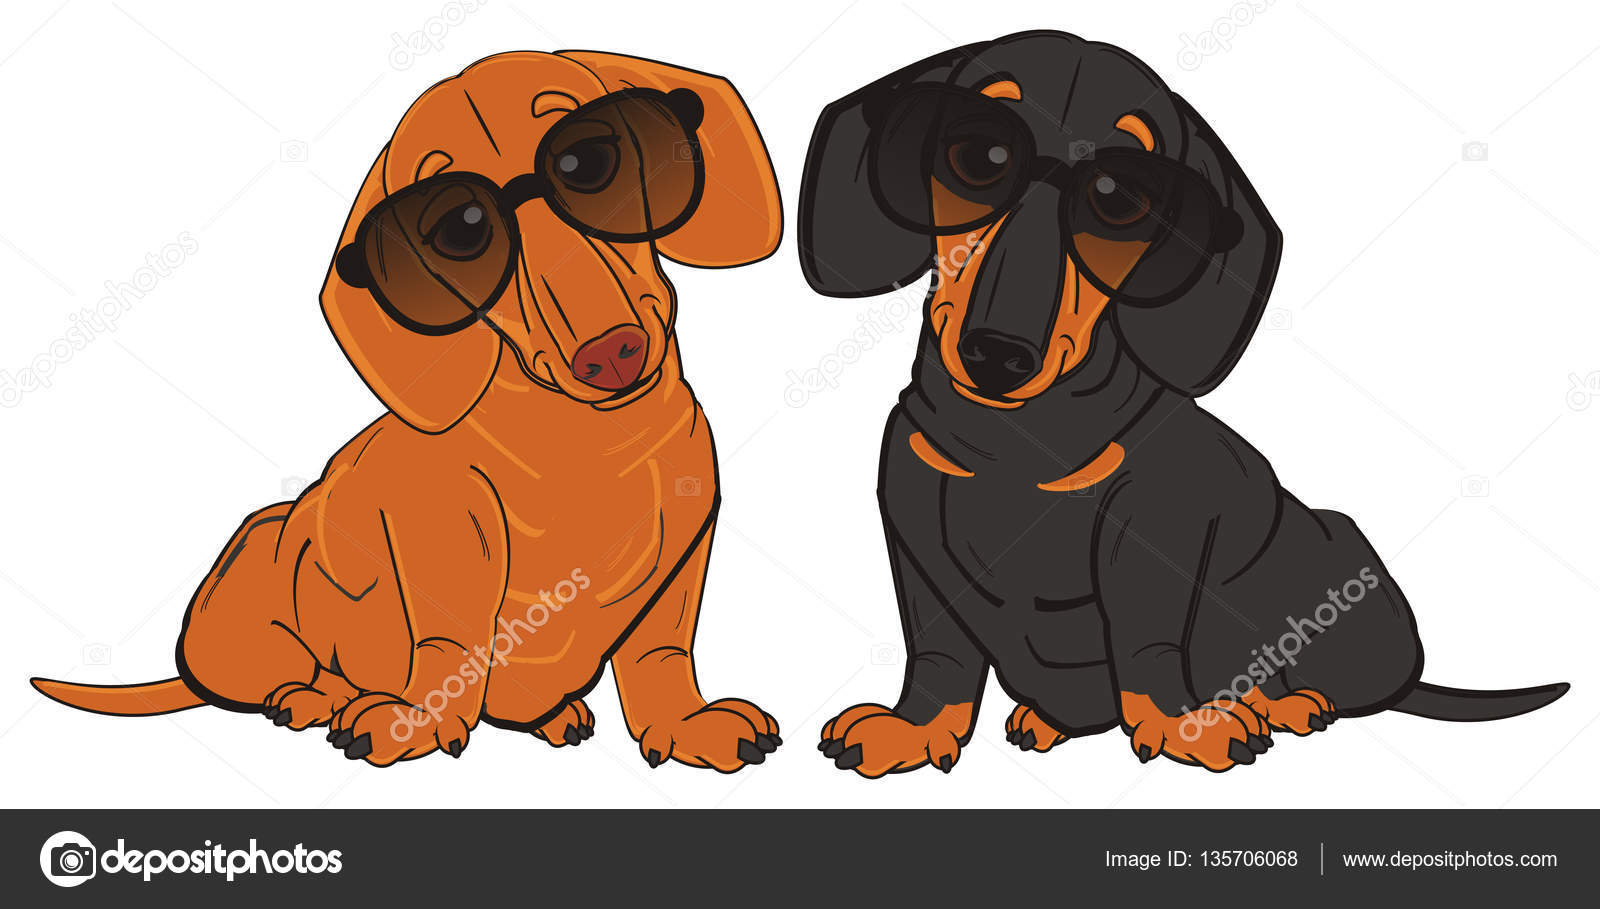 dachshund with sunglasses